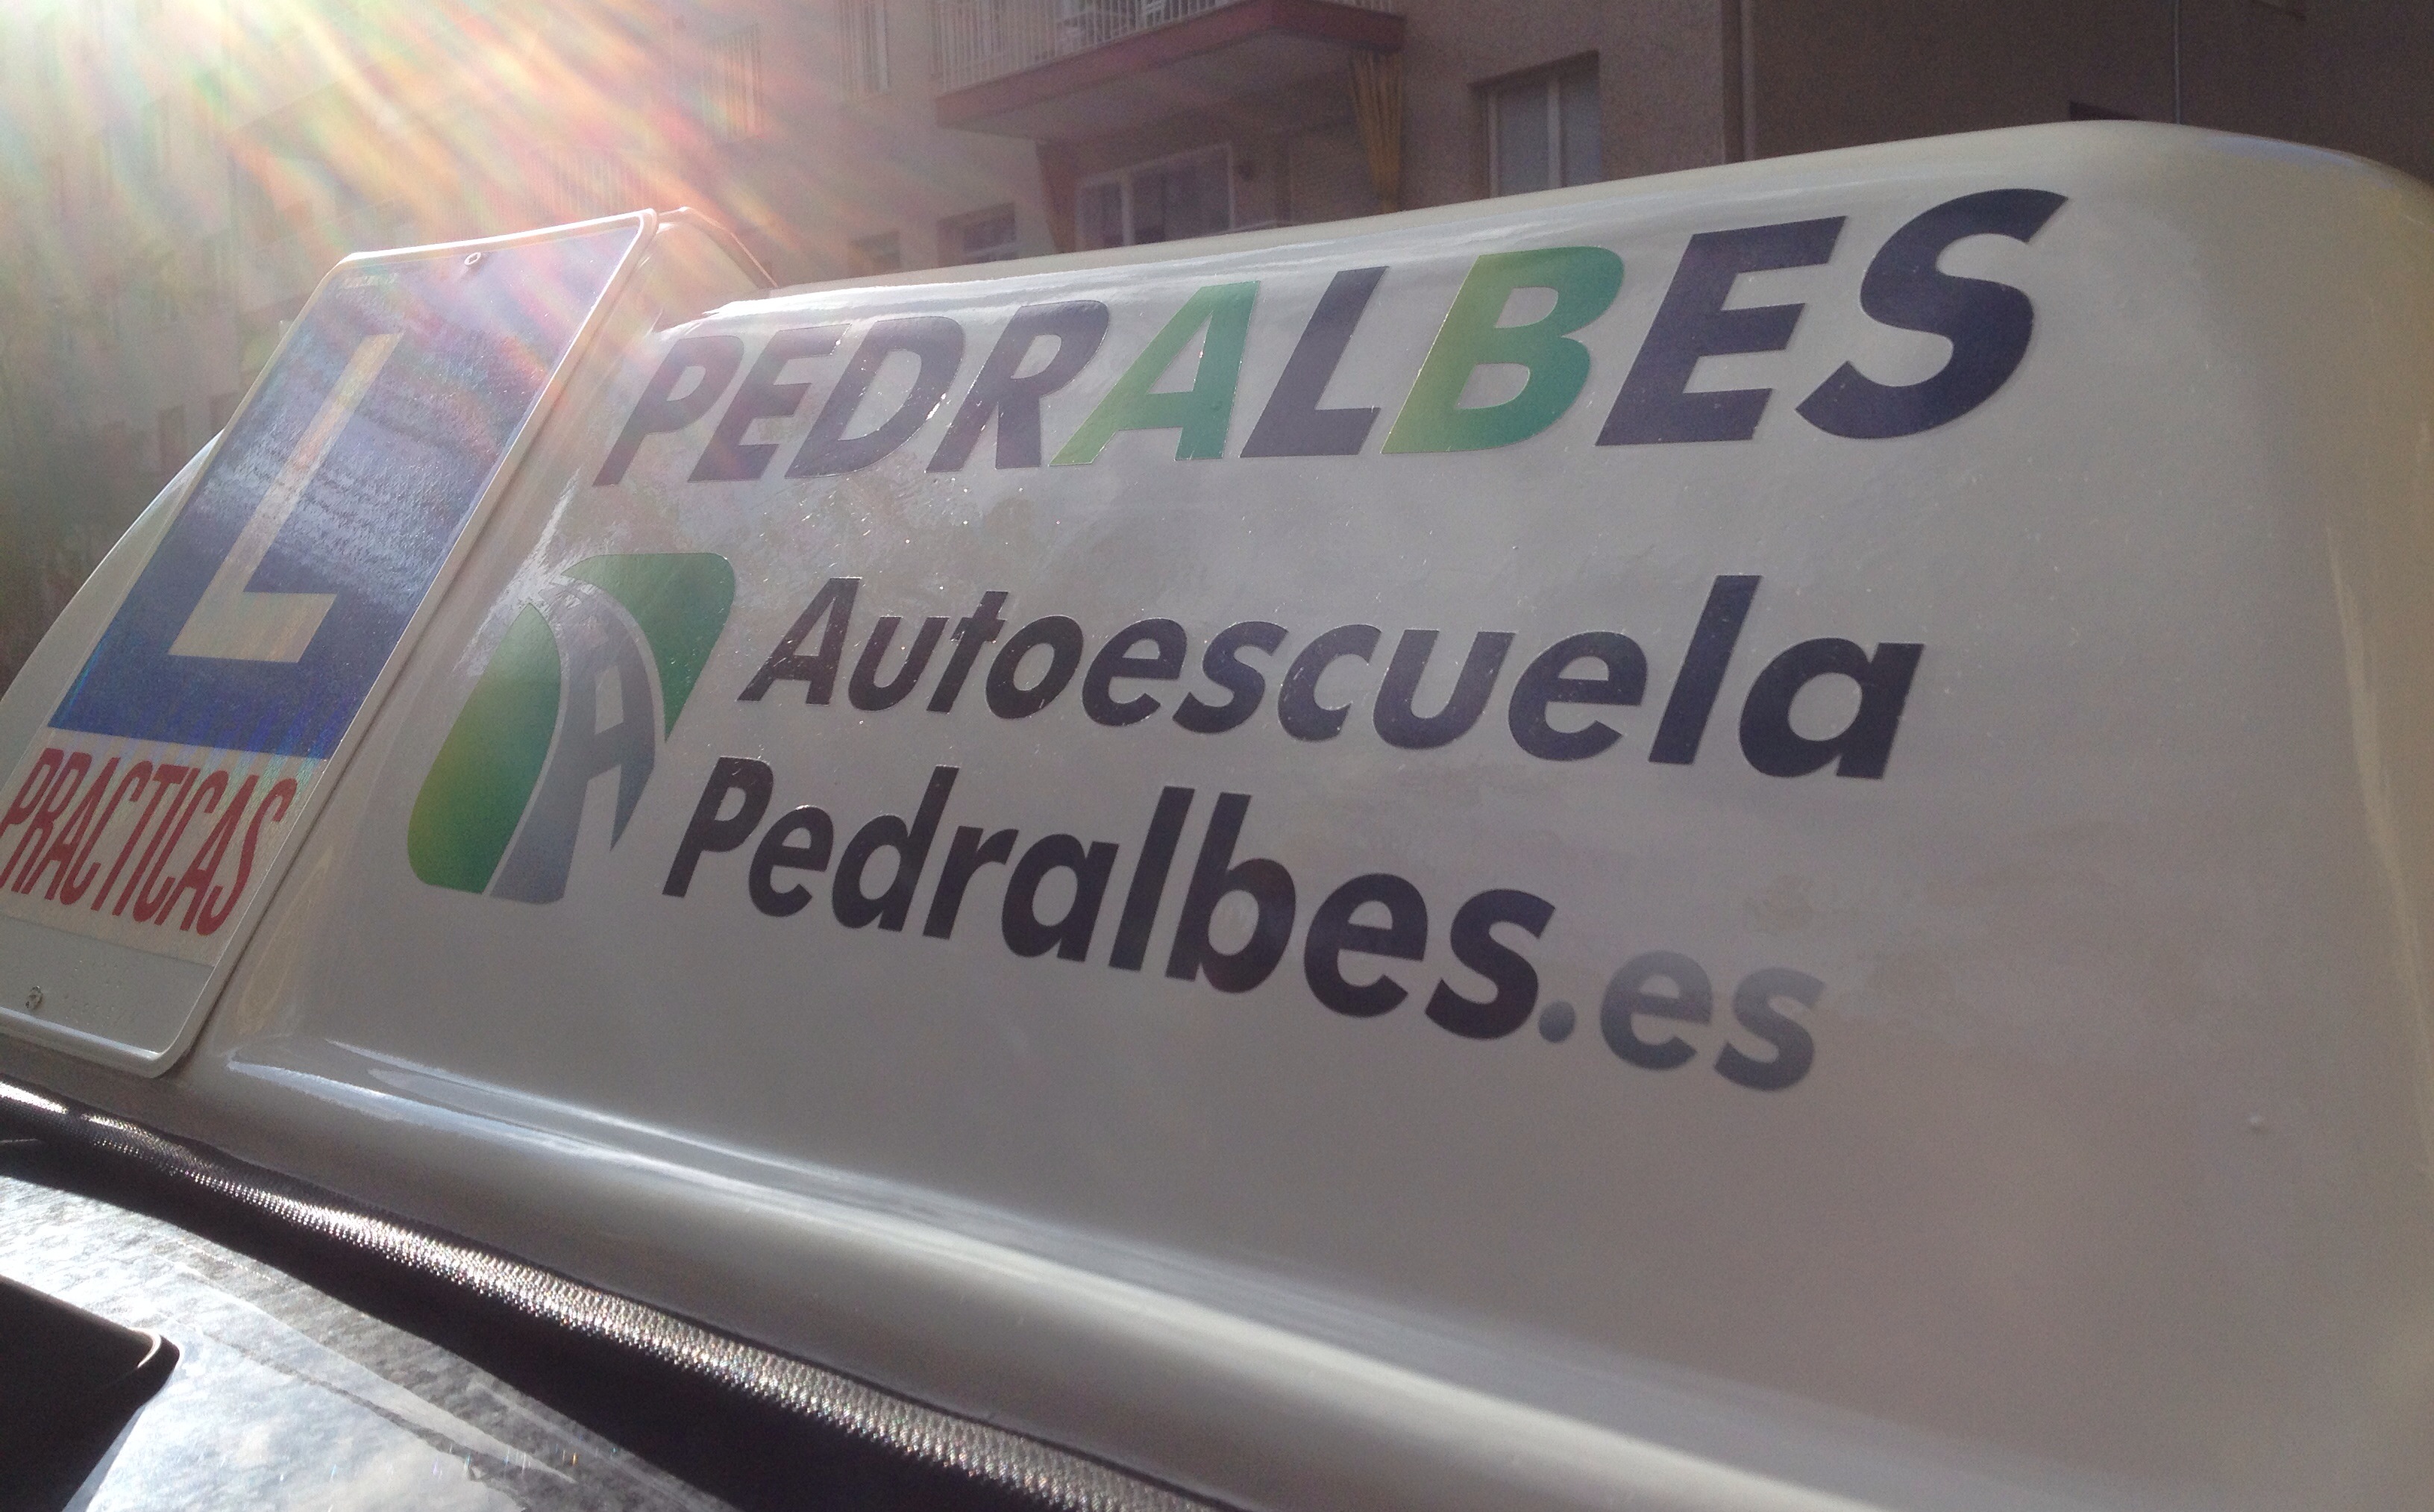 PEDRALBES - Barcelona